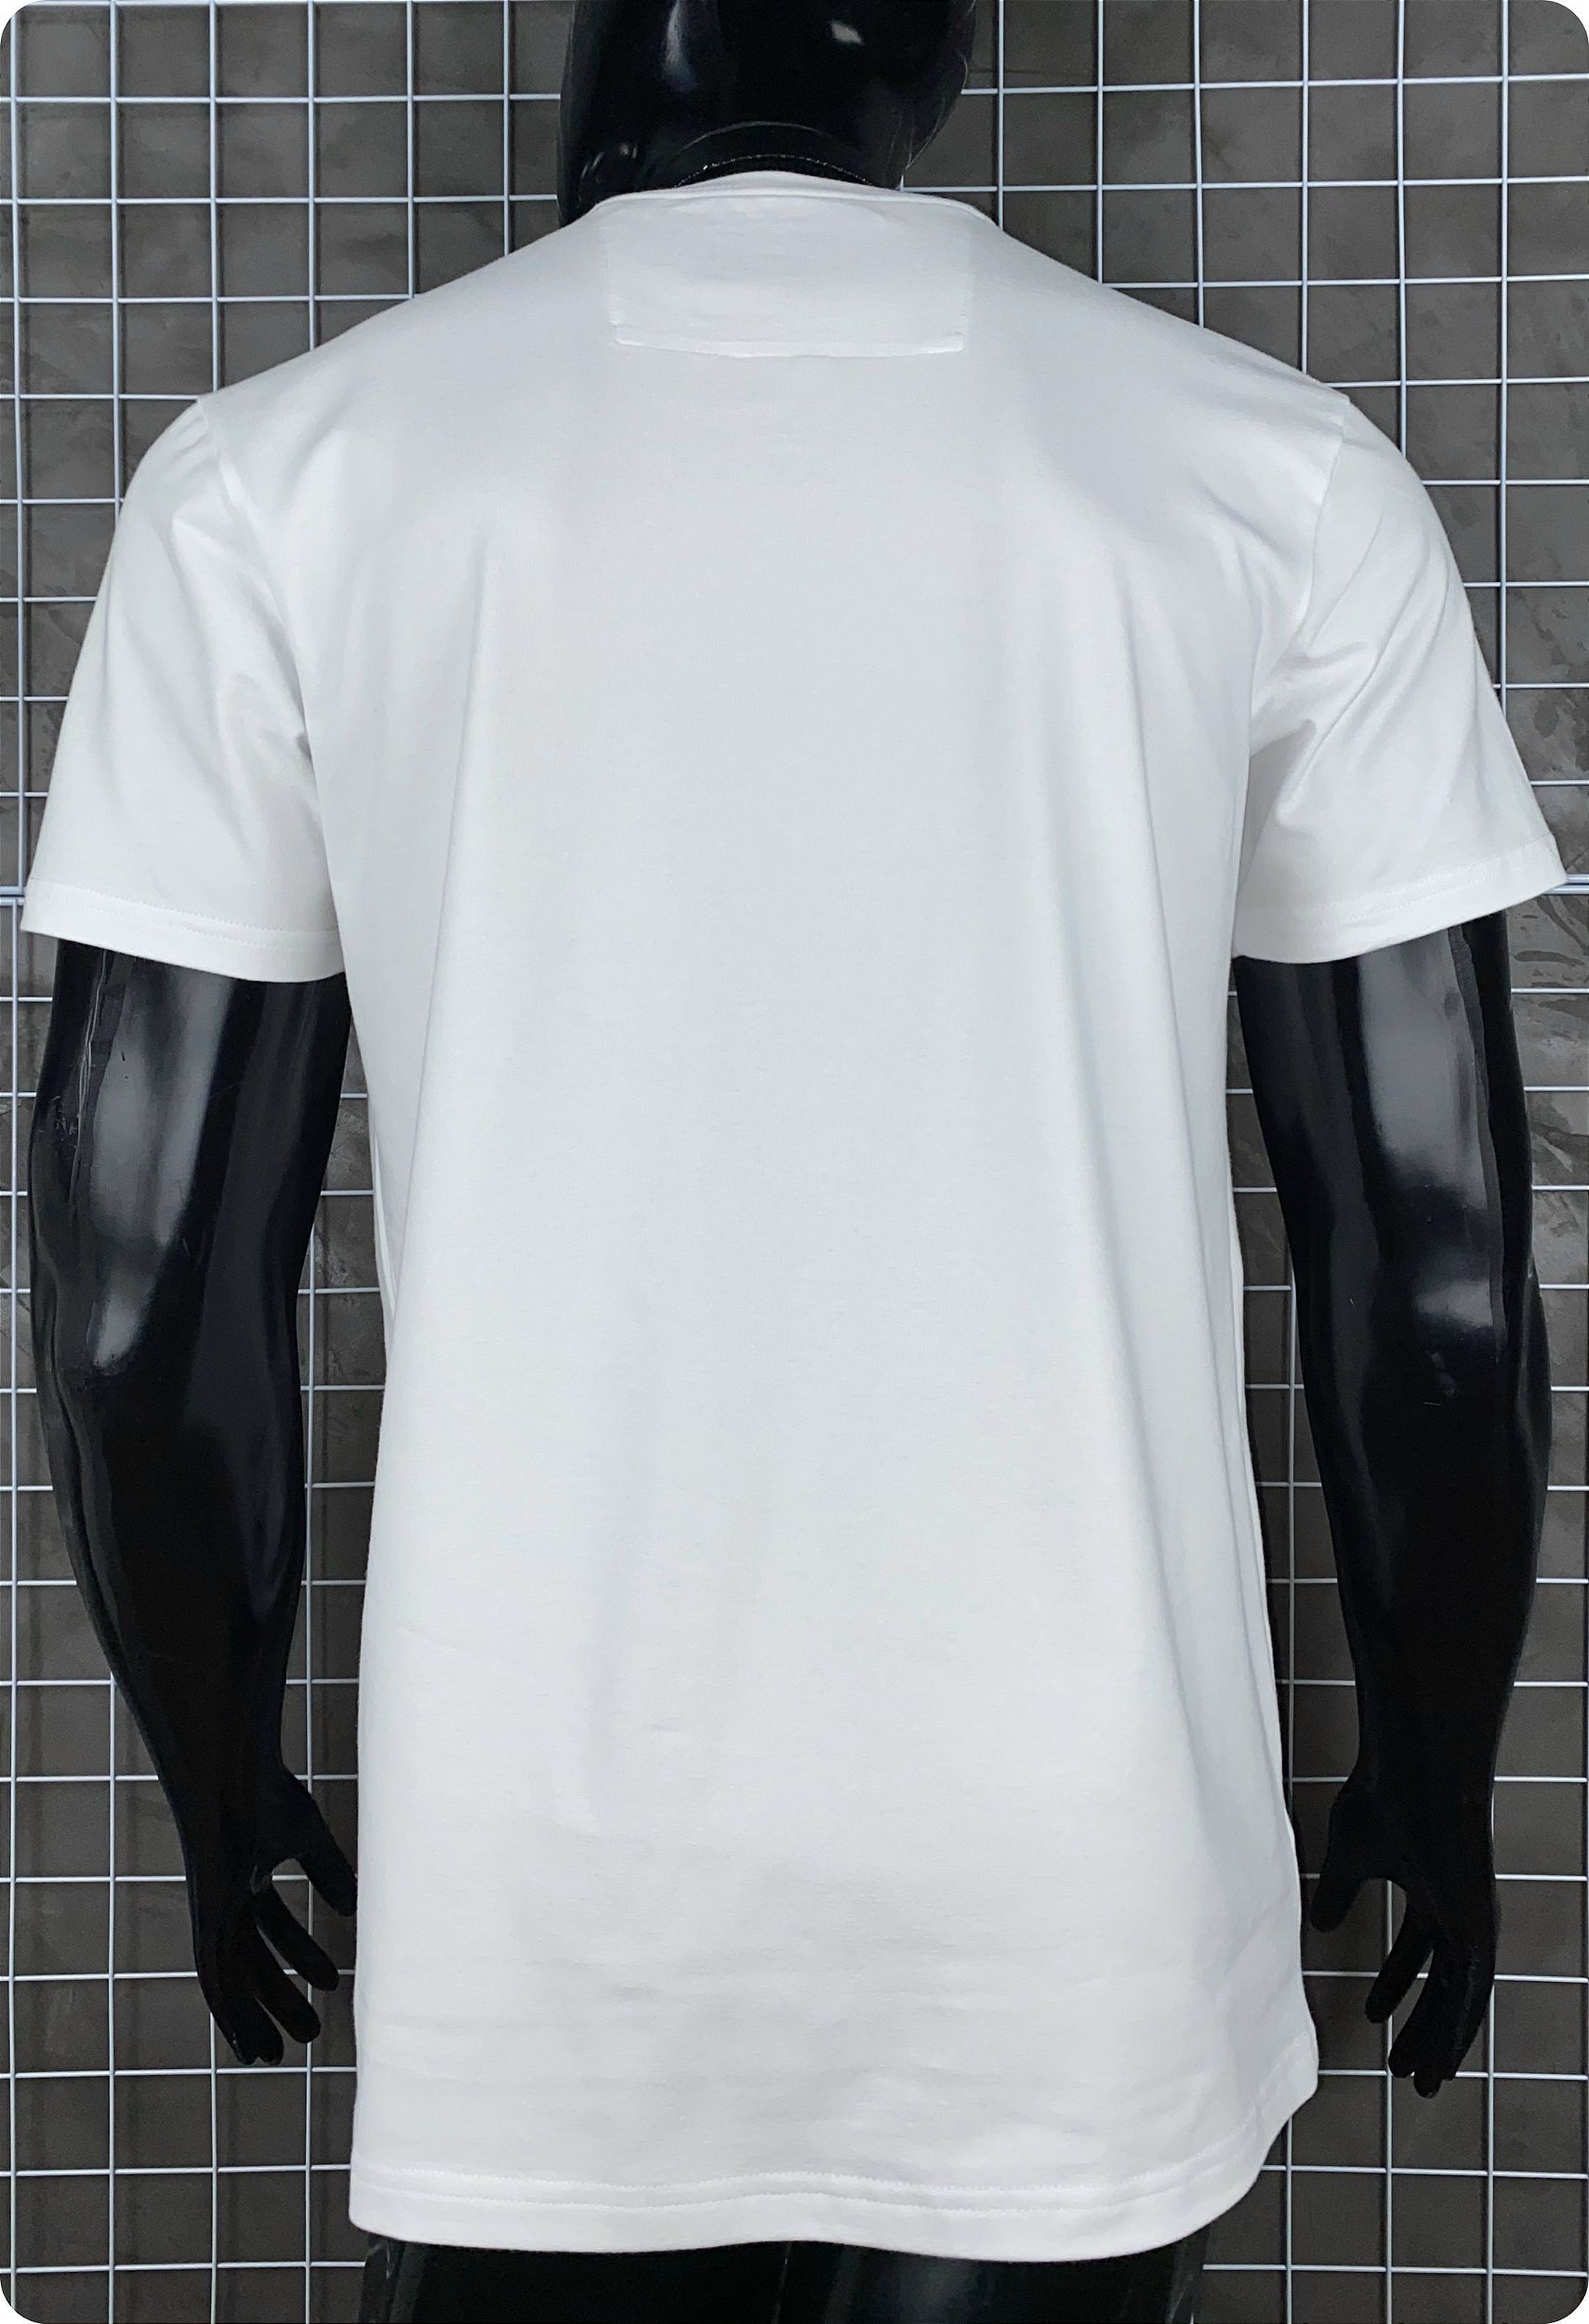 Camiseta masculina premium preta placa de metal frontal prateada - JOHN  VERDAZZI: The Ultimate Fashion Luxury E-Shop - Site Oficial